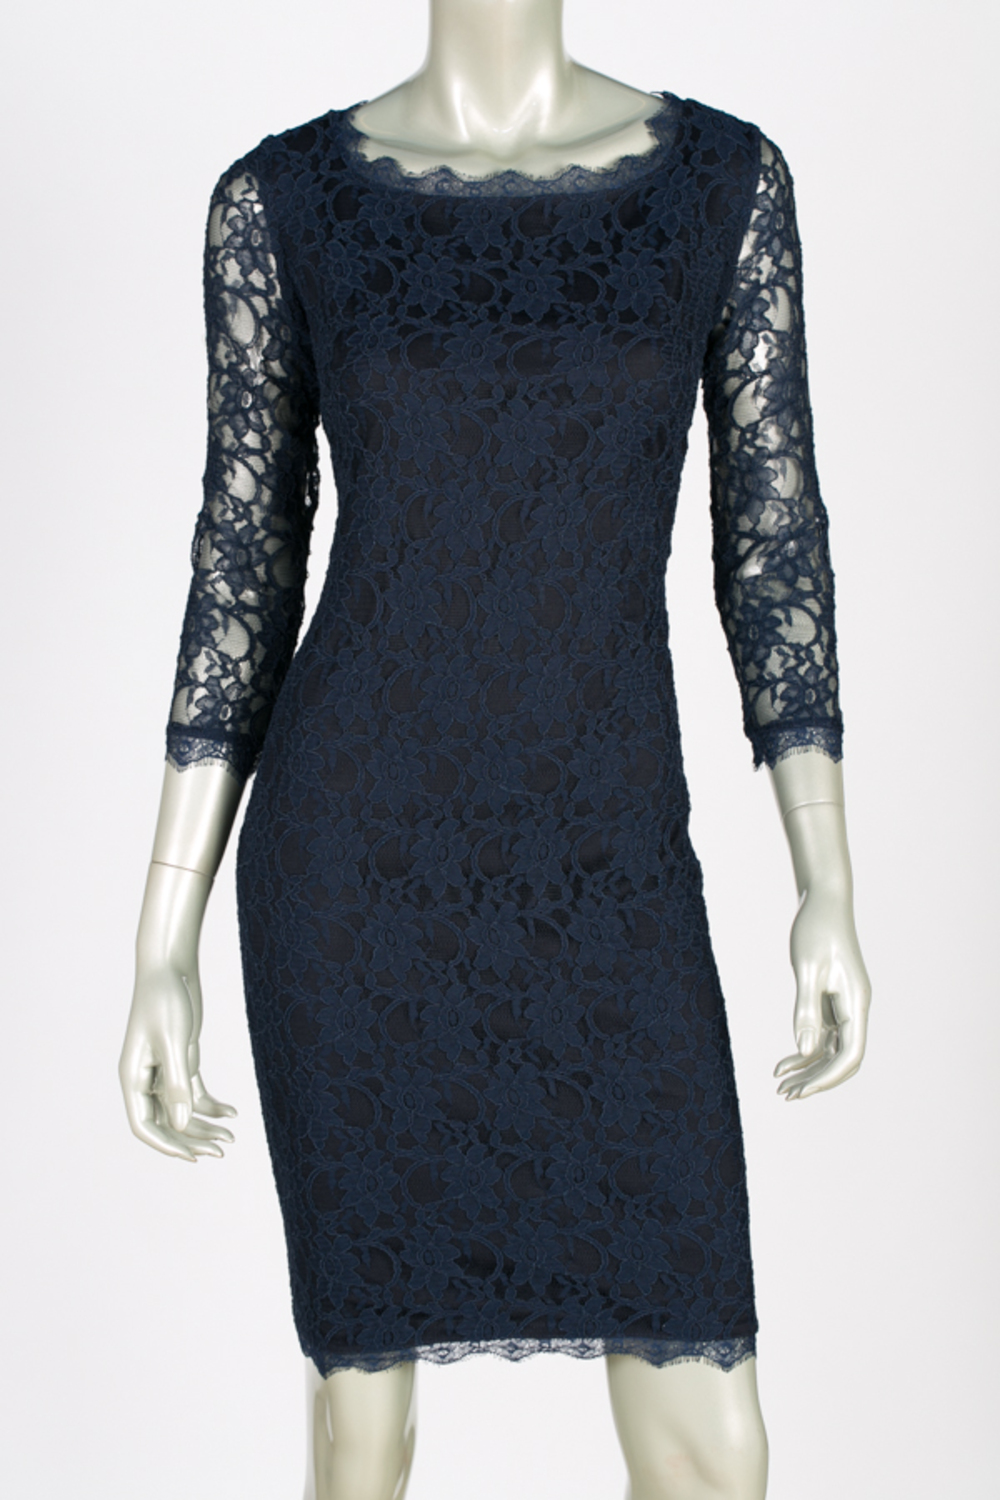 Joseph Ribkoff dress style 40404. Navy Blue